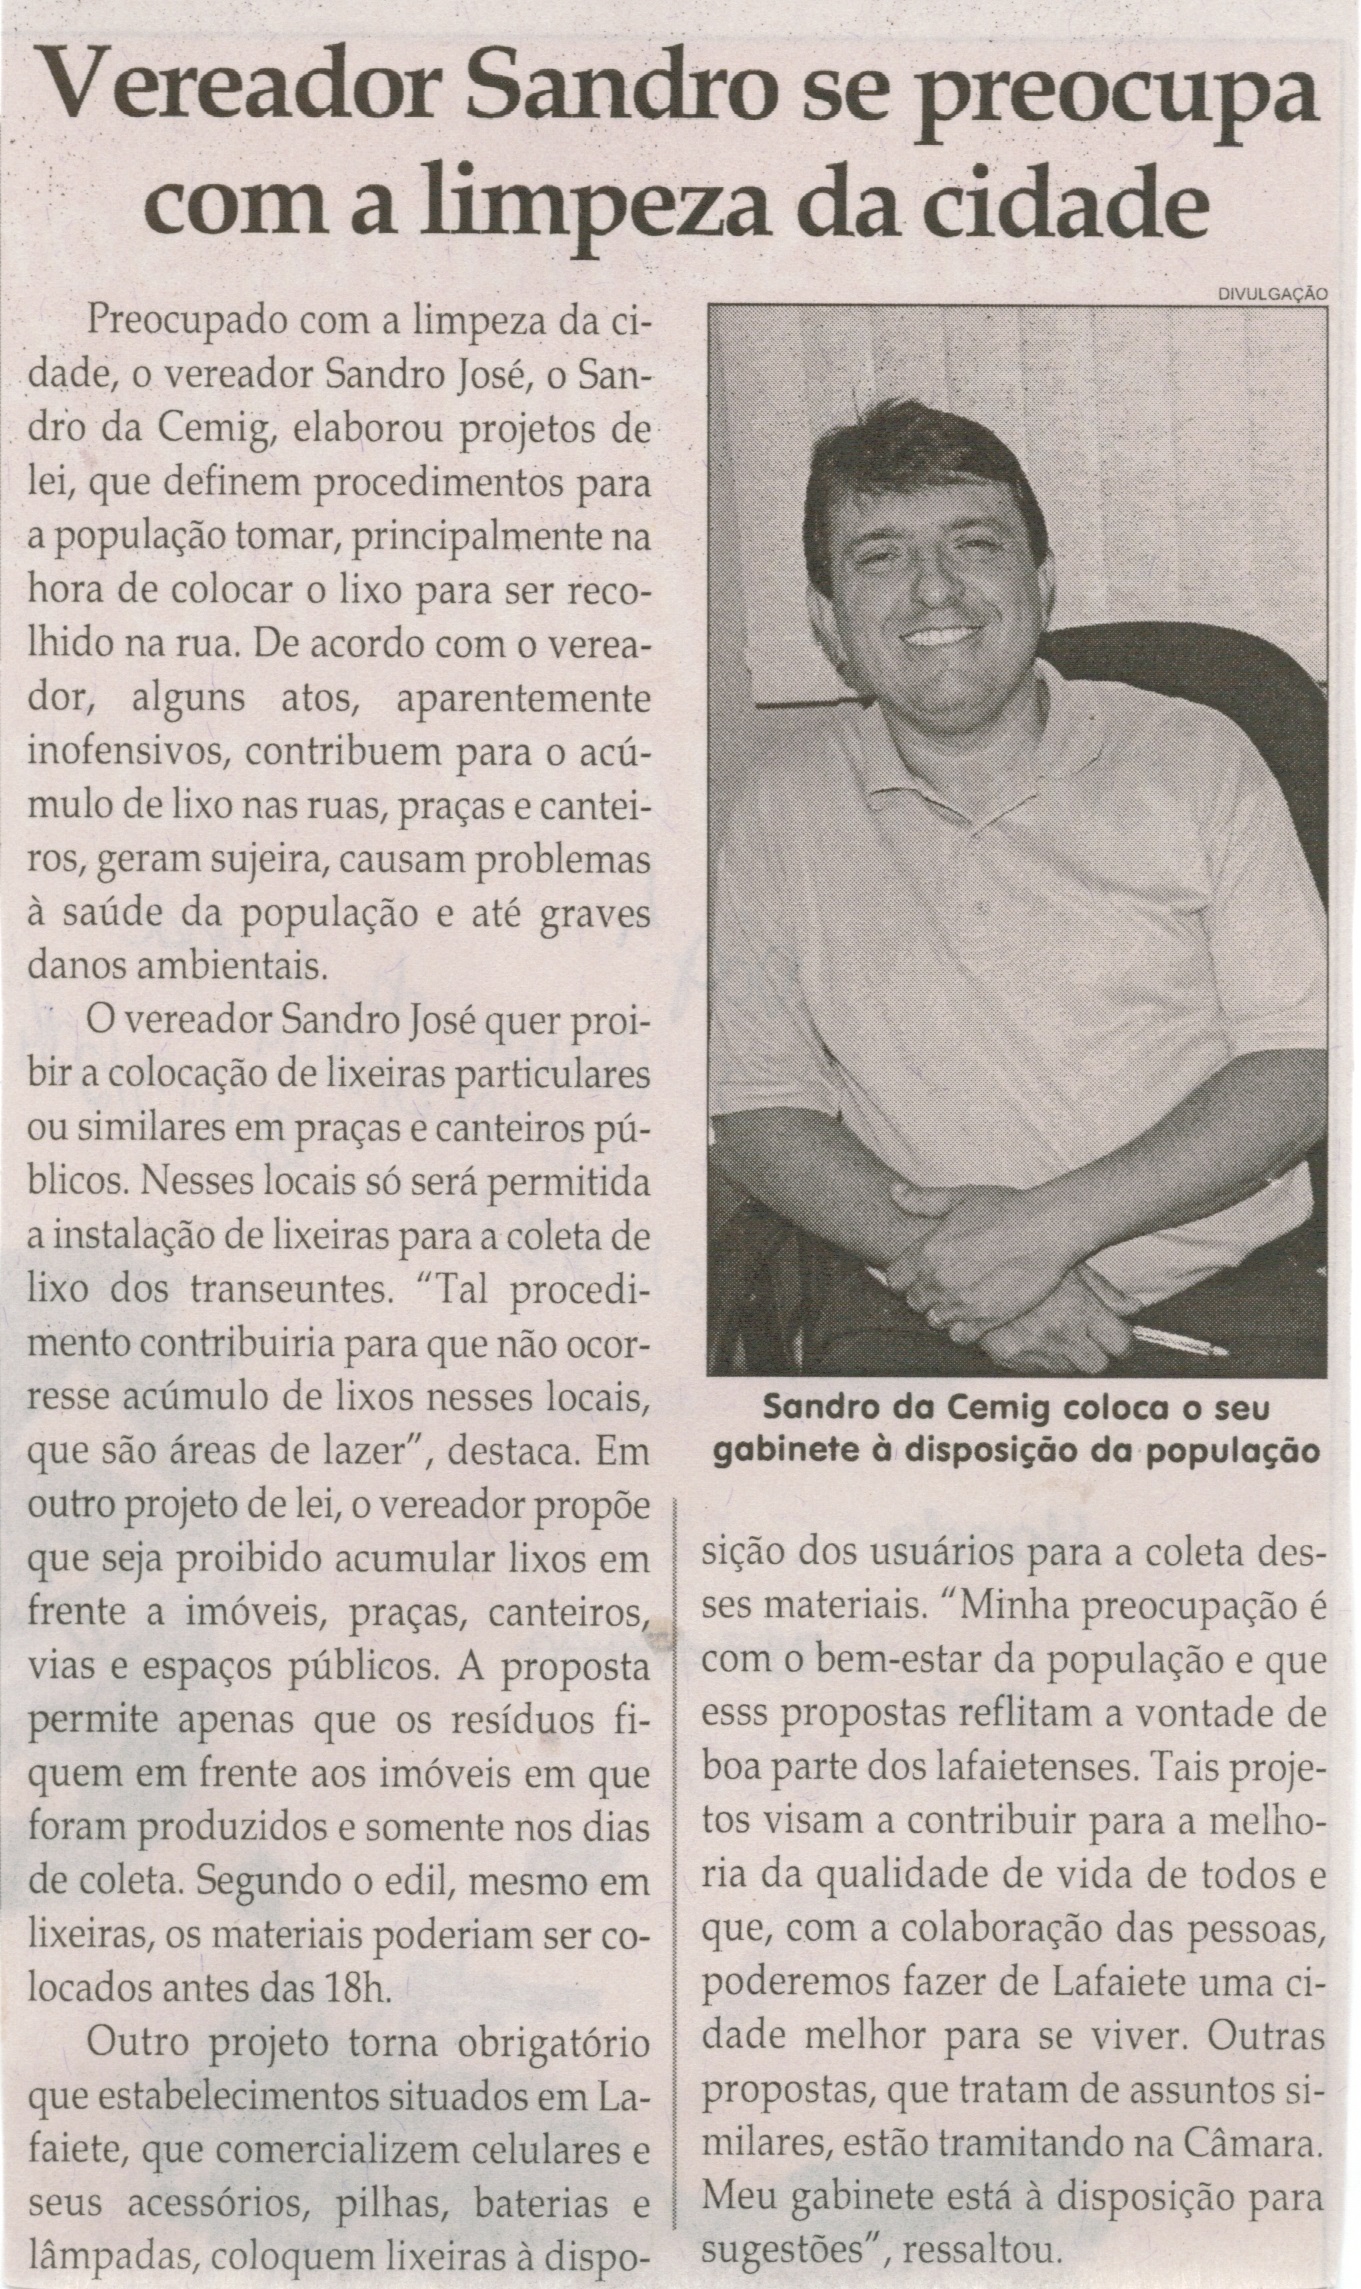 Vereador Sandro se preocupa com a limpeza da cidade. Jornal Correio da Cidade, Conselheiro Lafaiete, 21 mar. 2014, p. 4.